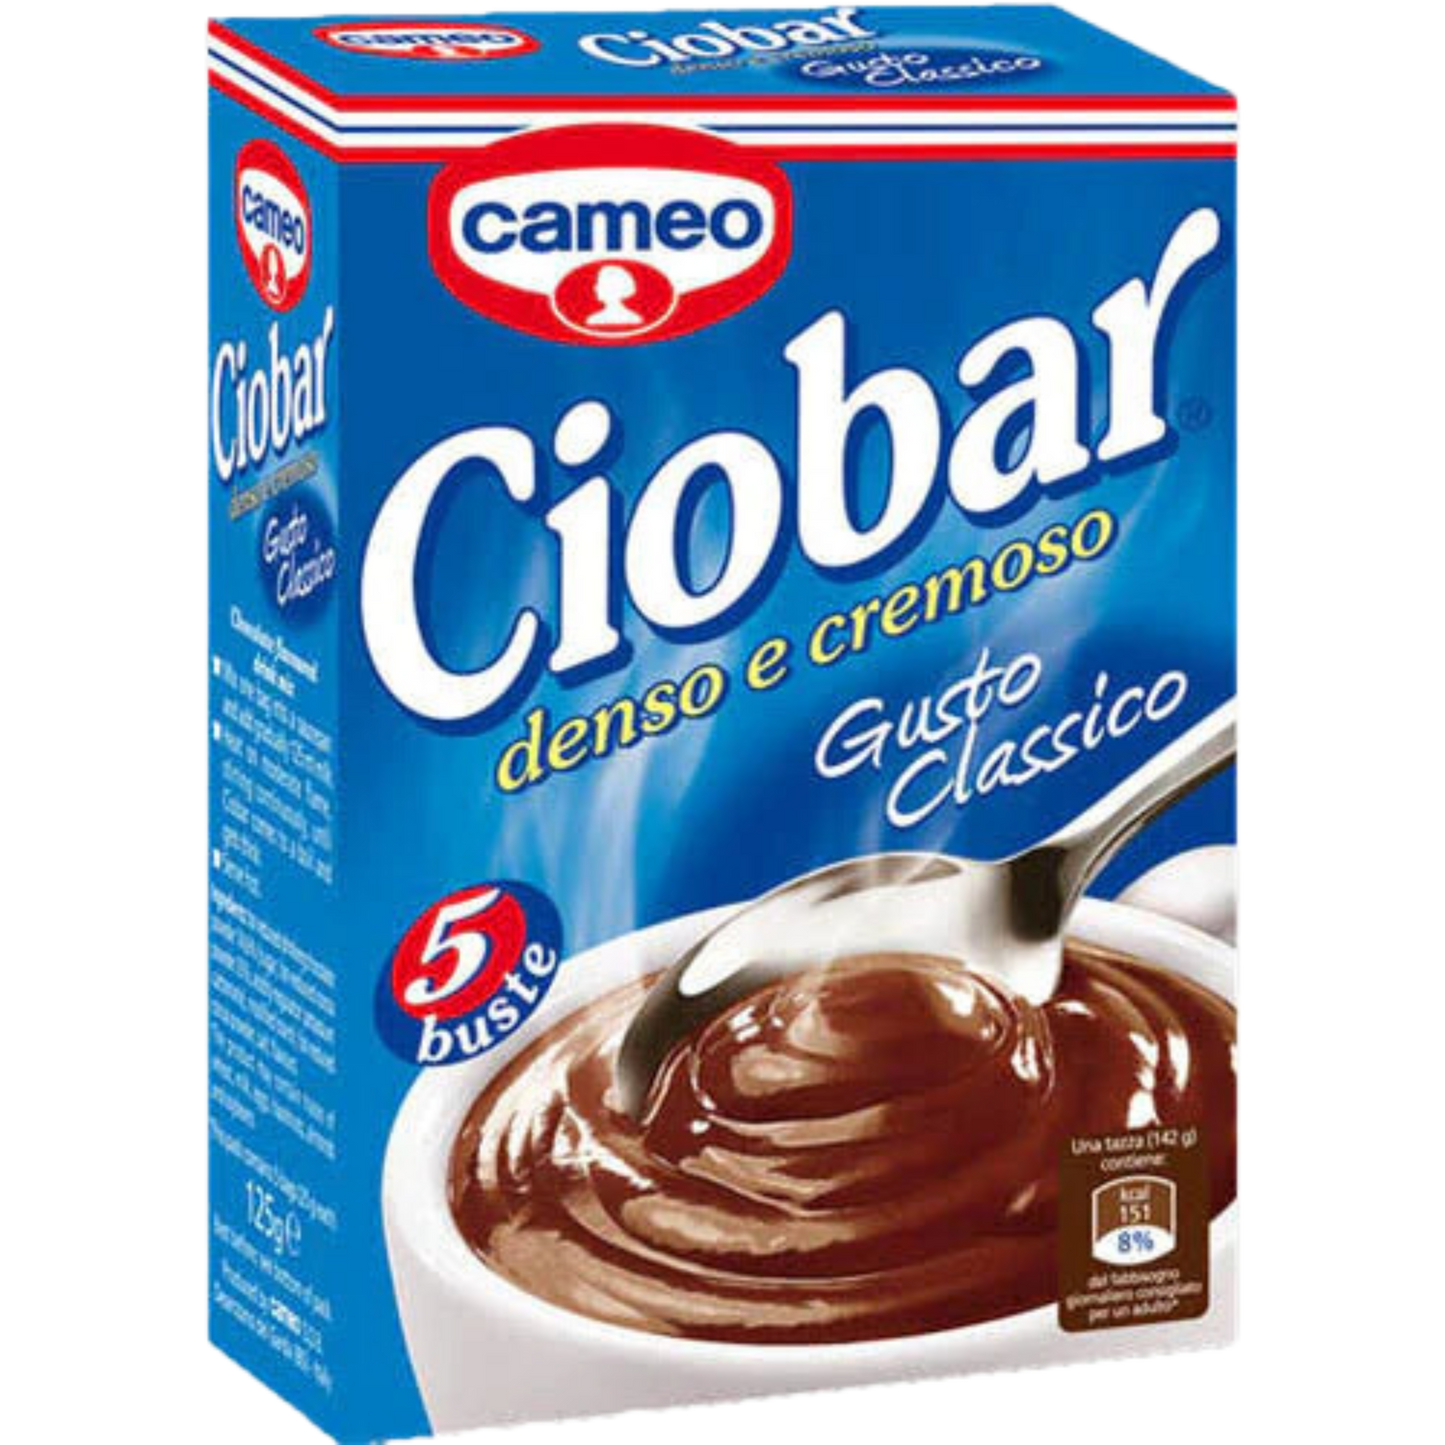 Ciobar Thick Hot Chocolate x 5 sachets